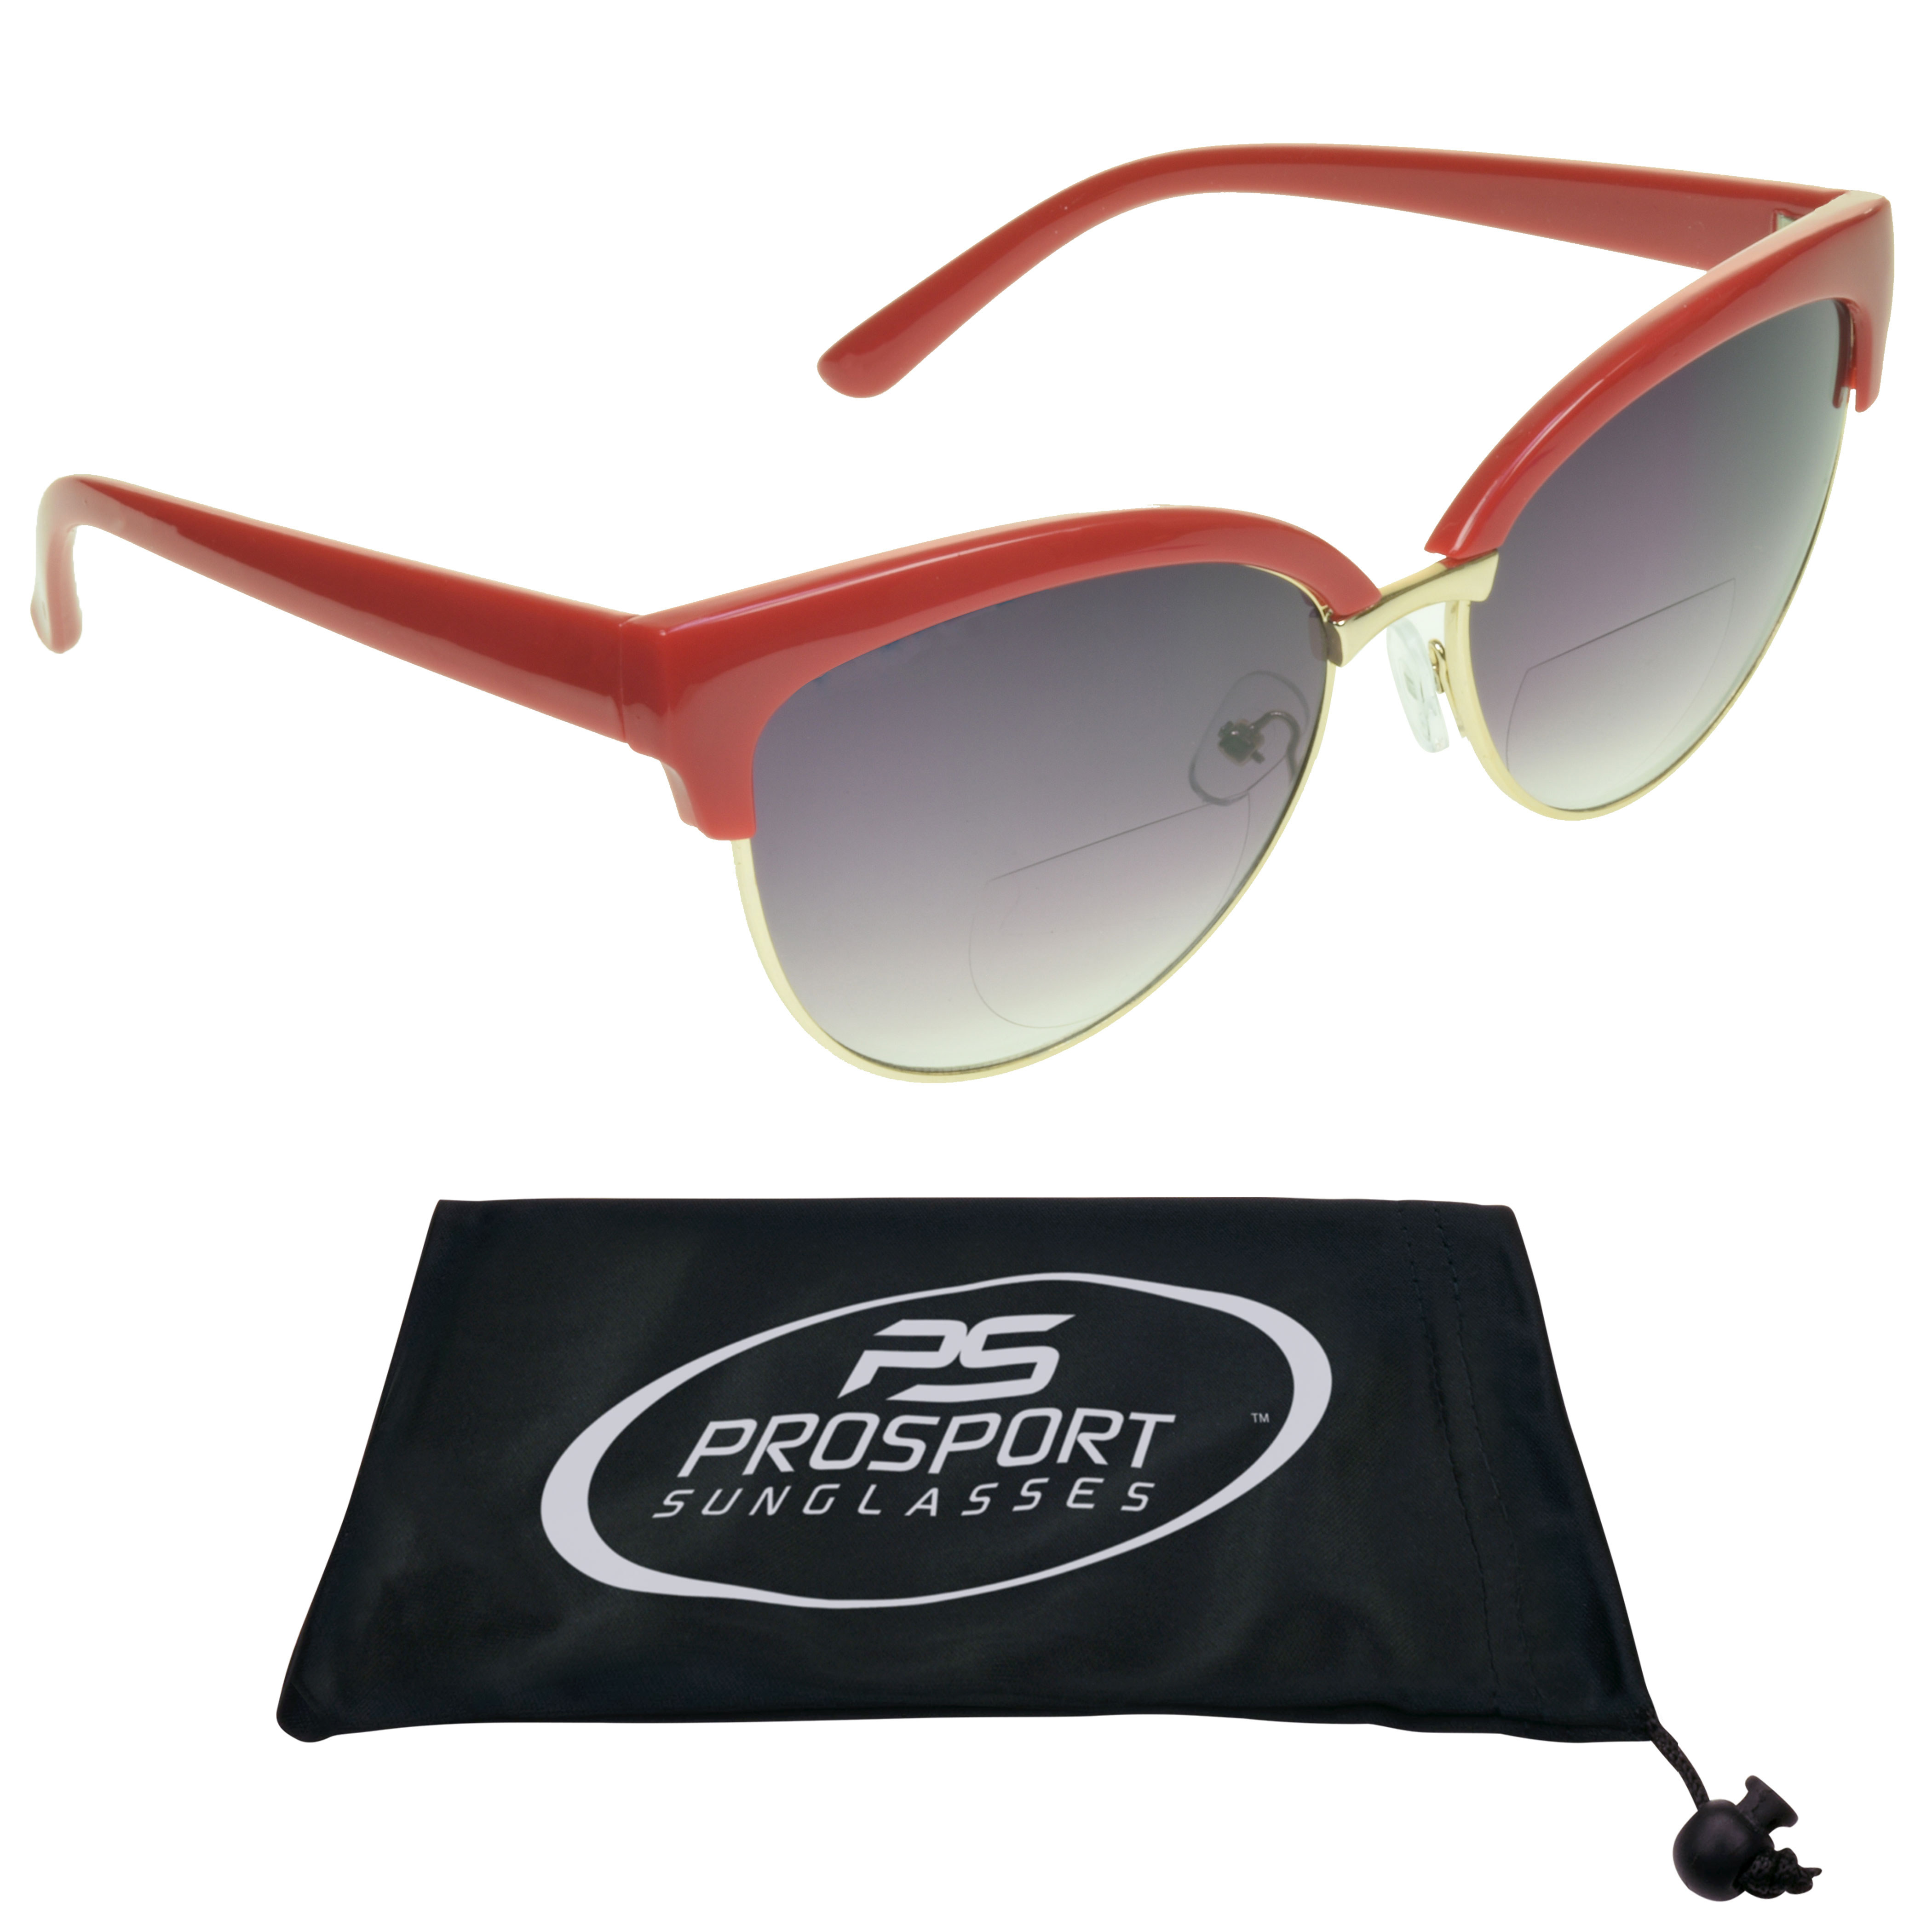 proSPORT Women Bifocal Reading Cateye Fashion Horn Rim Sunglasses Red Gold Frame Smoke Lens +2.00 - image 1 of 5